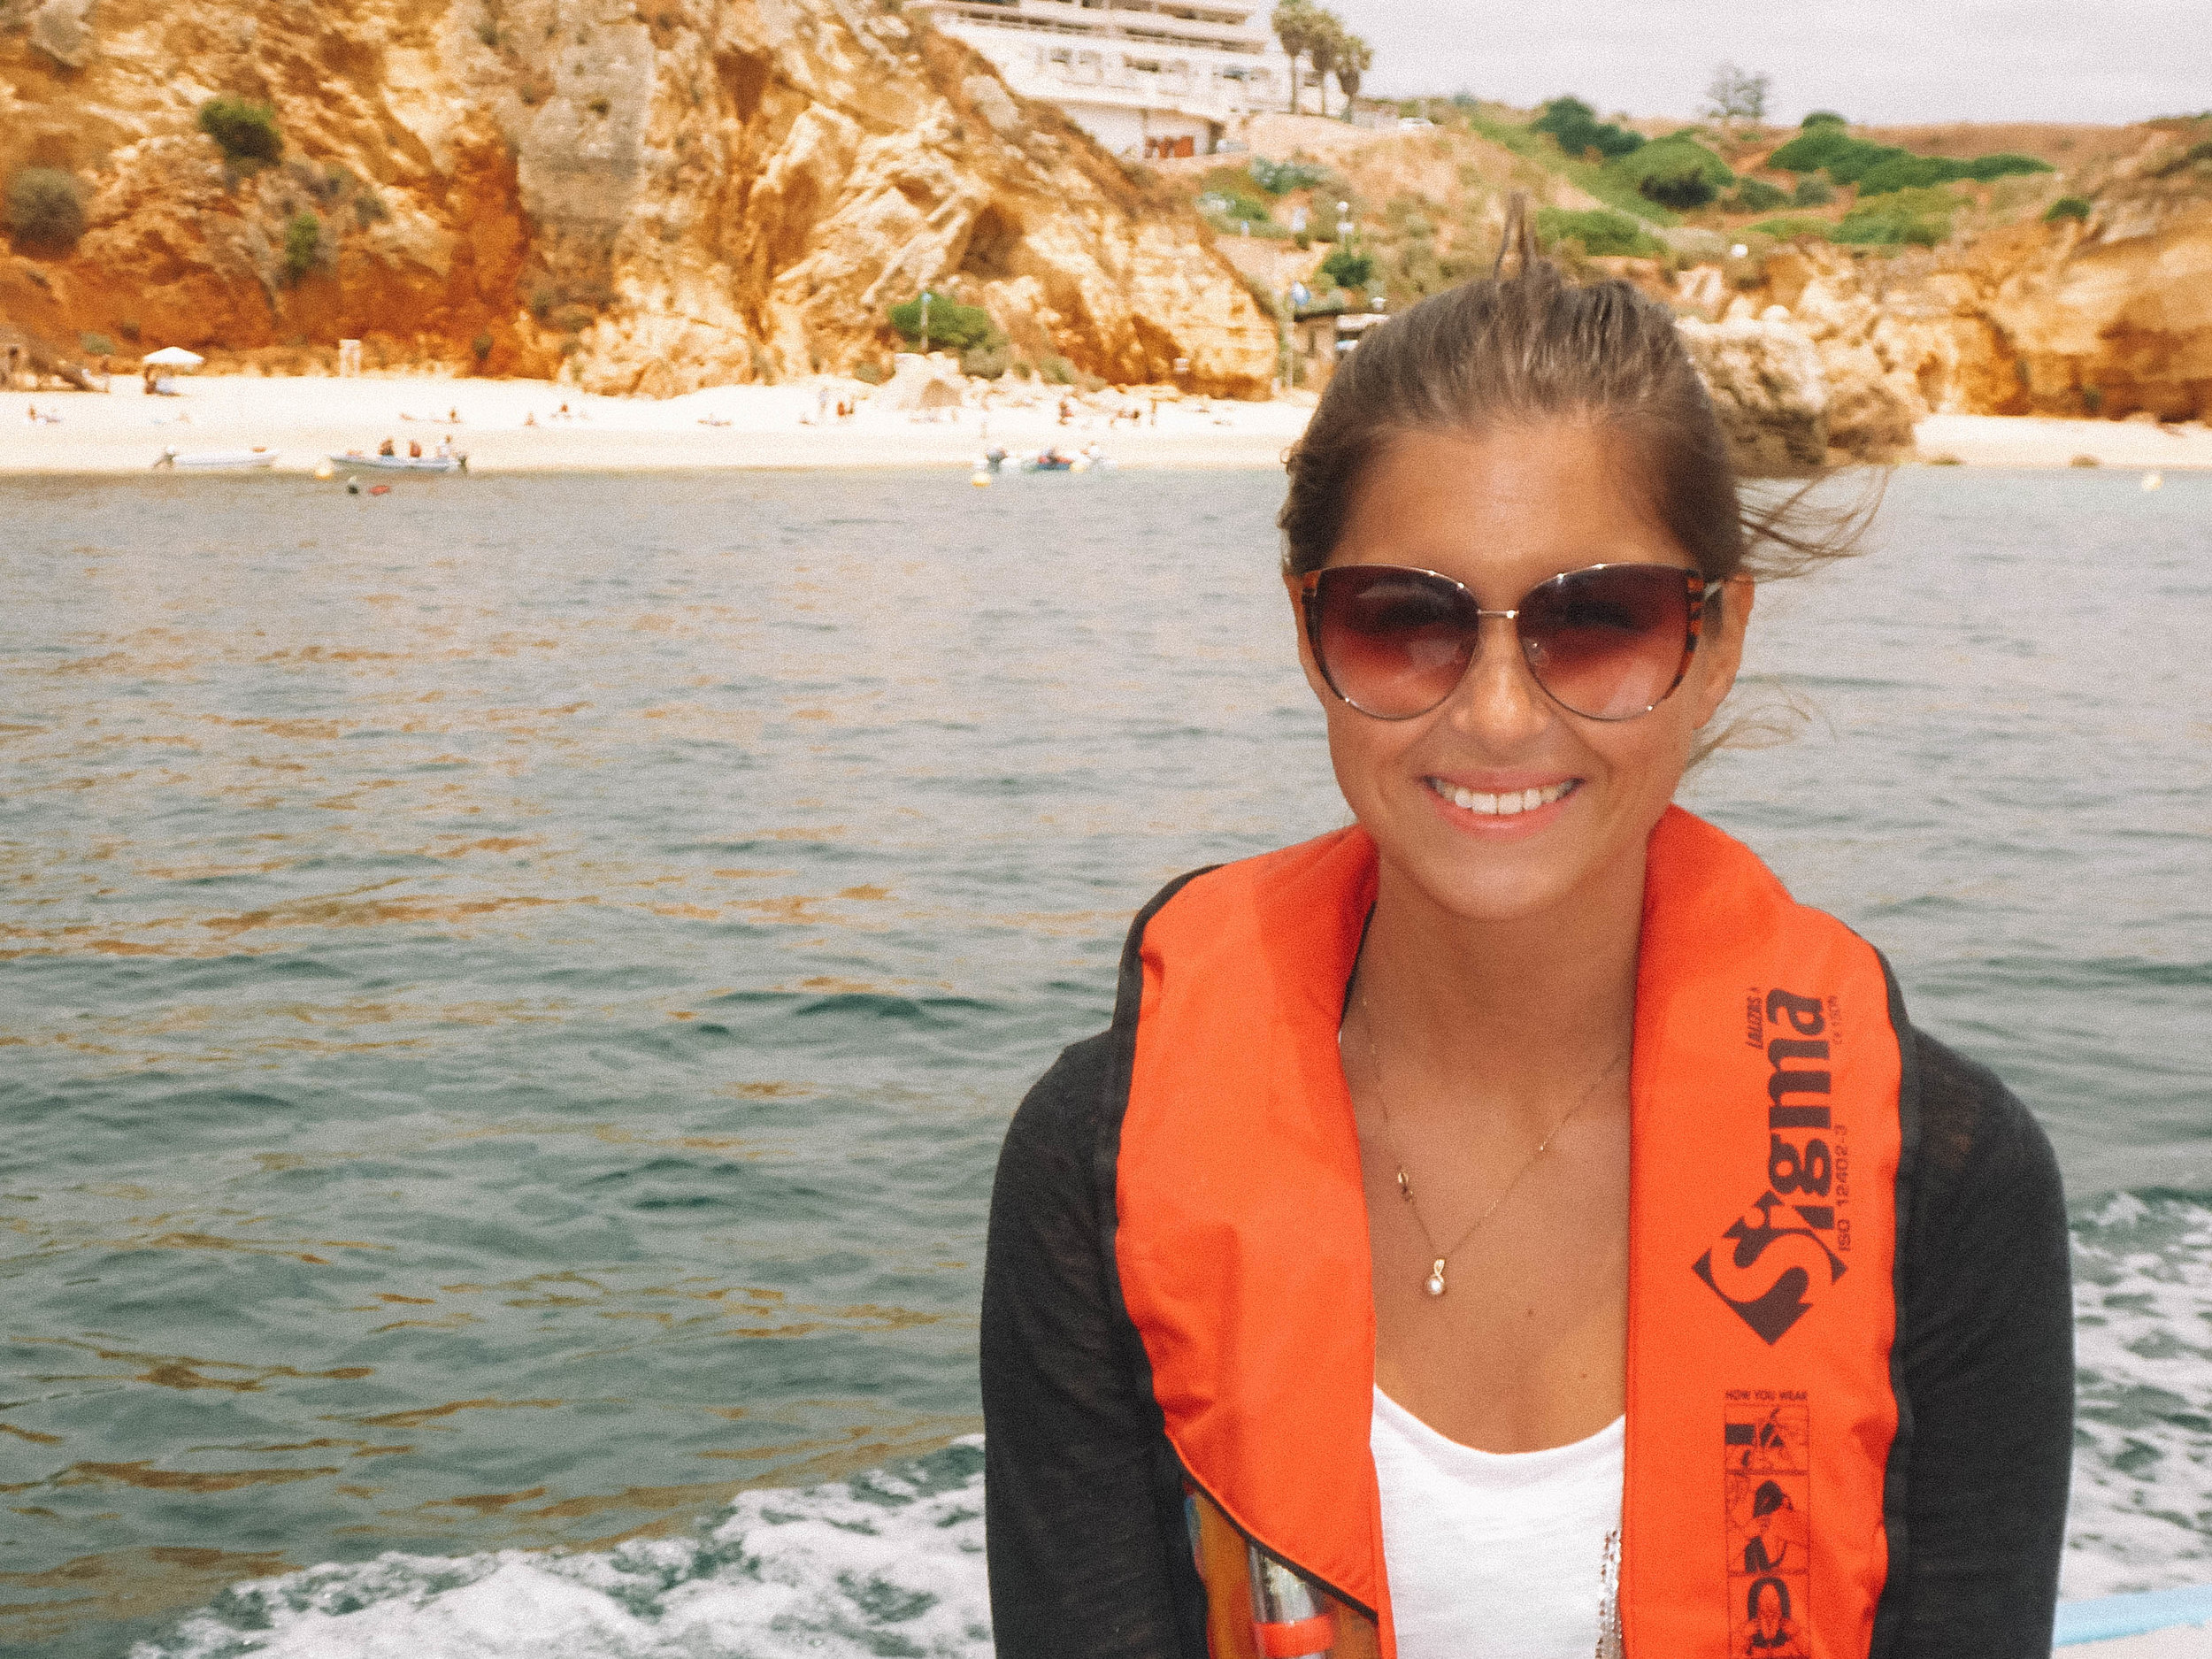 Boat Excursion to Explore the Sea Caves - Lagos - Algarve - Portugal